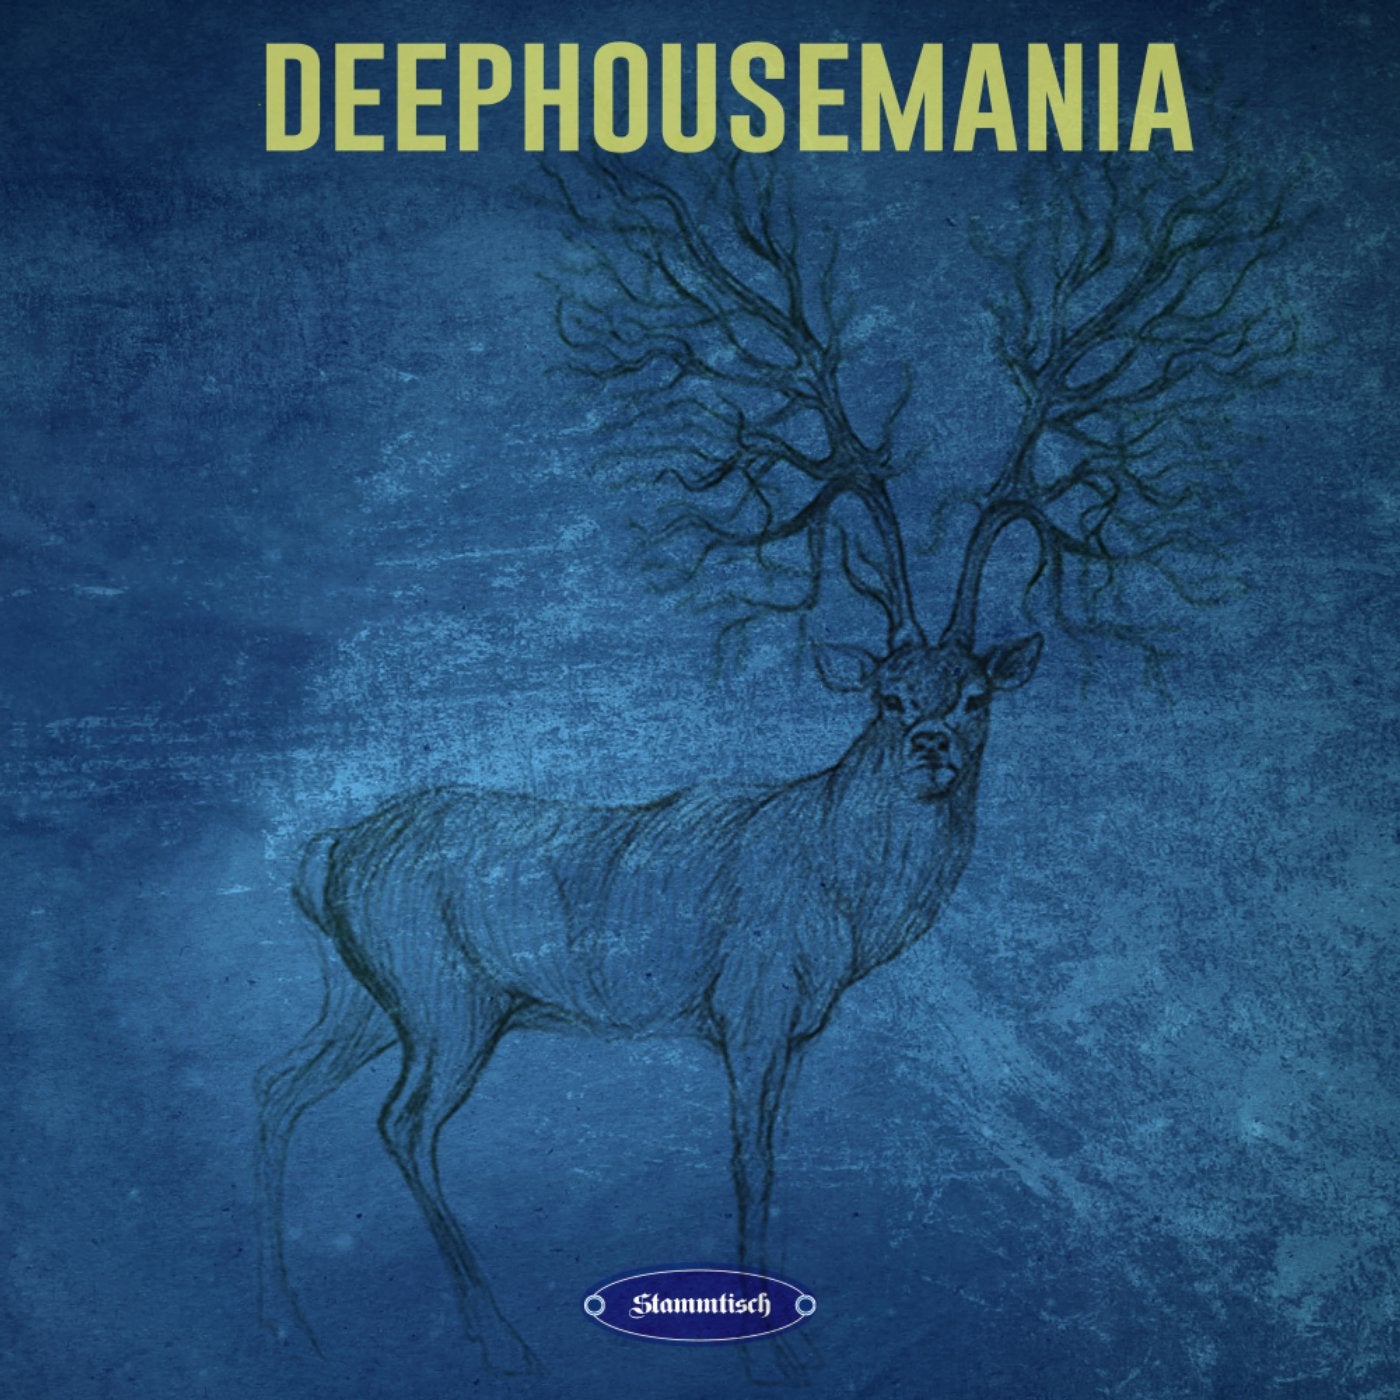 Deephousemania